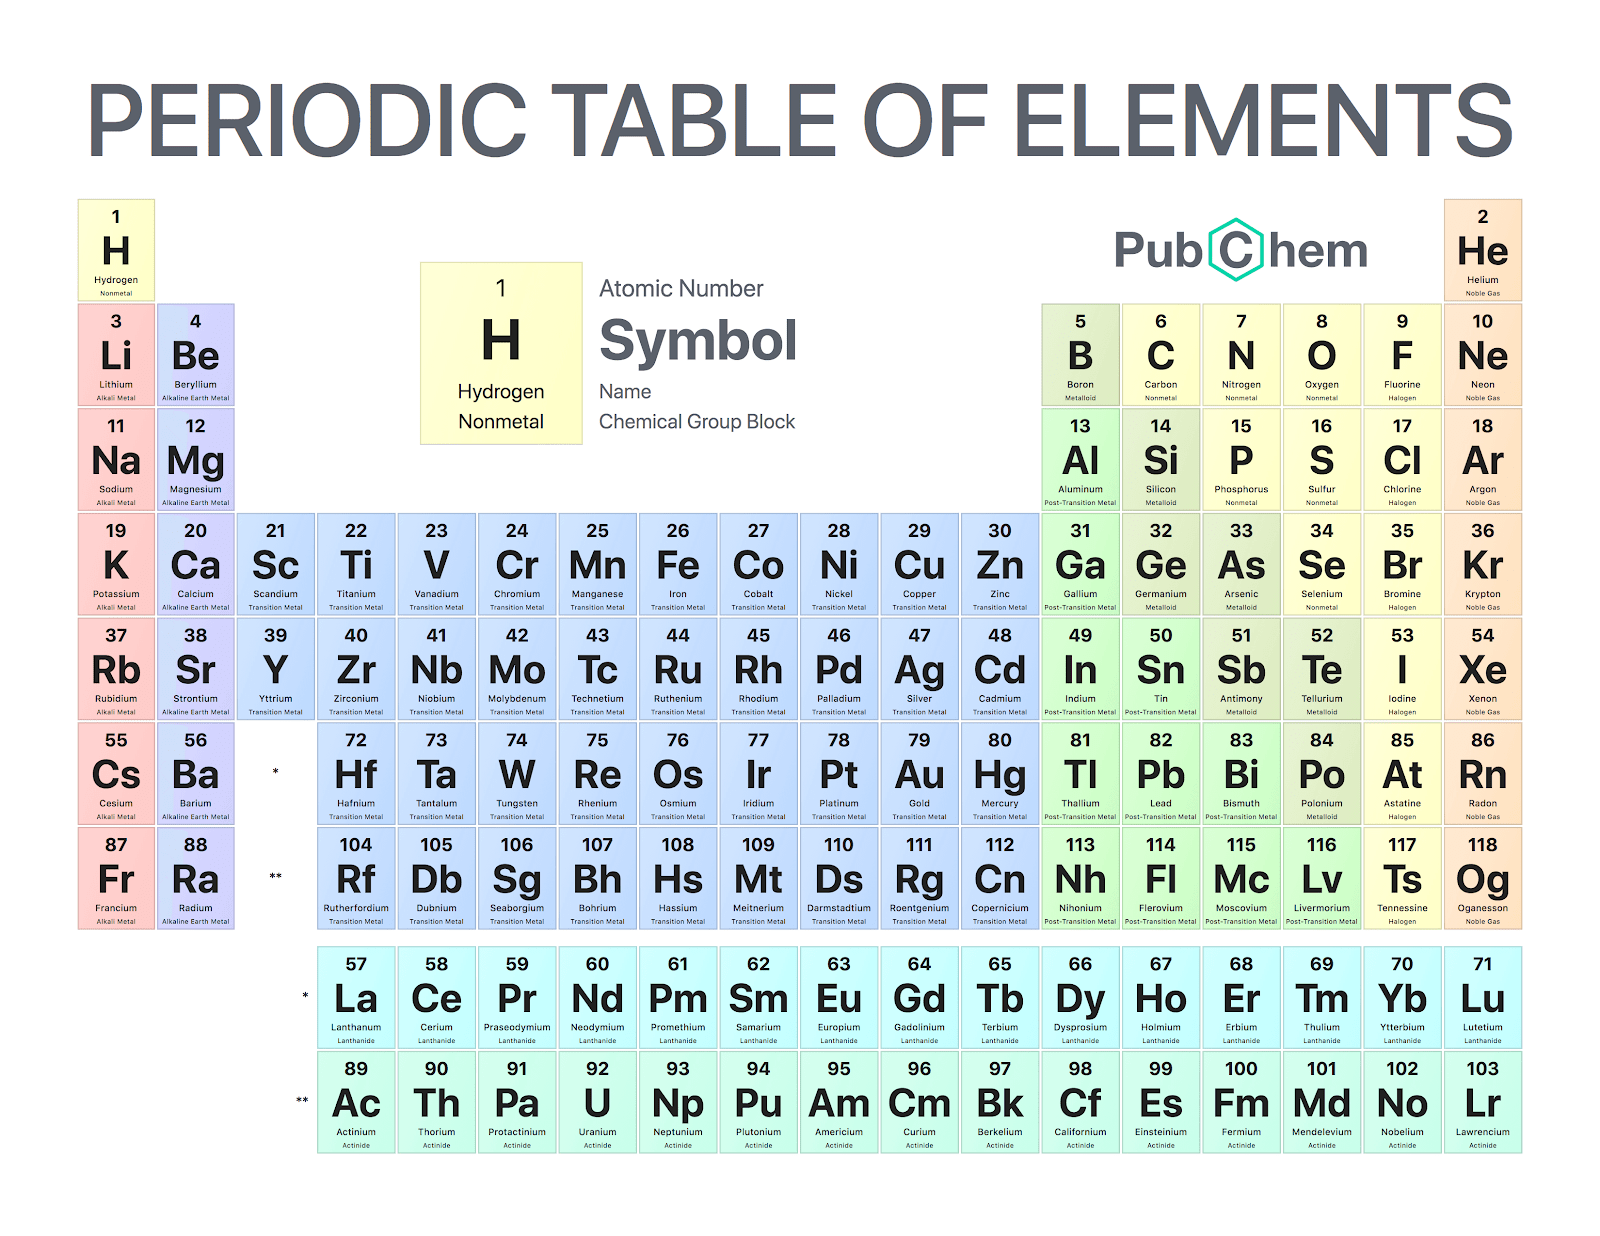 Periodic Table of Elements, https://pubchem.ncbi.nlm.nih.gov/periodic-table/